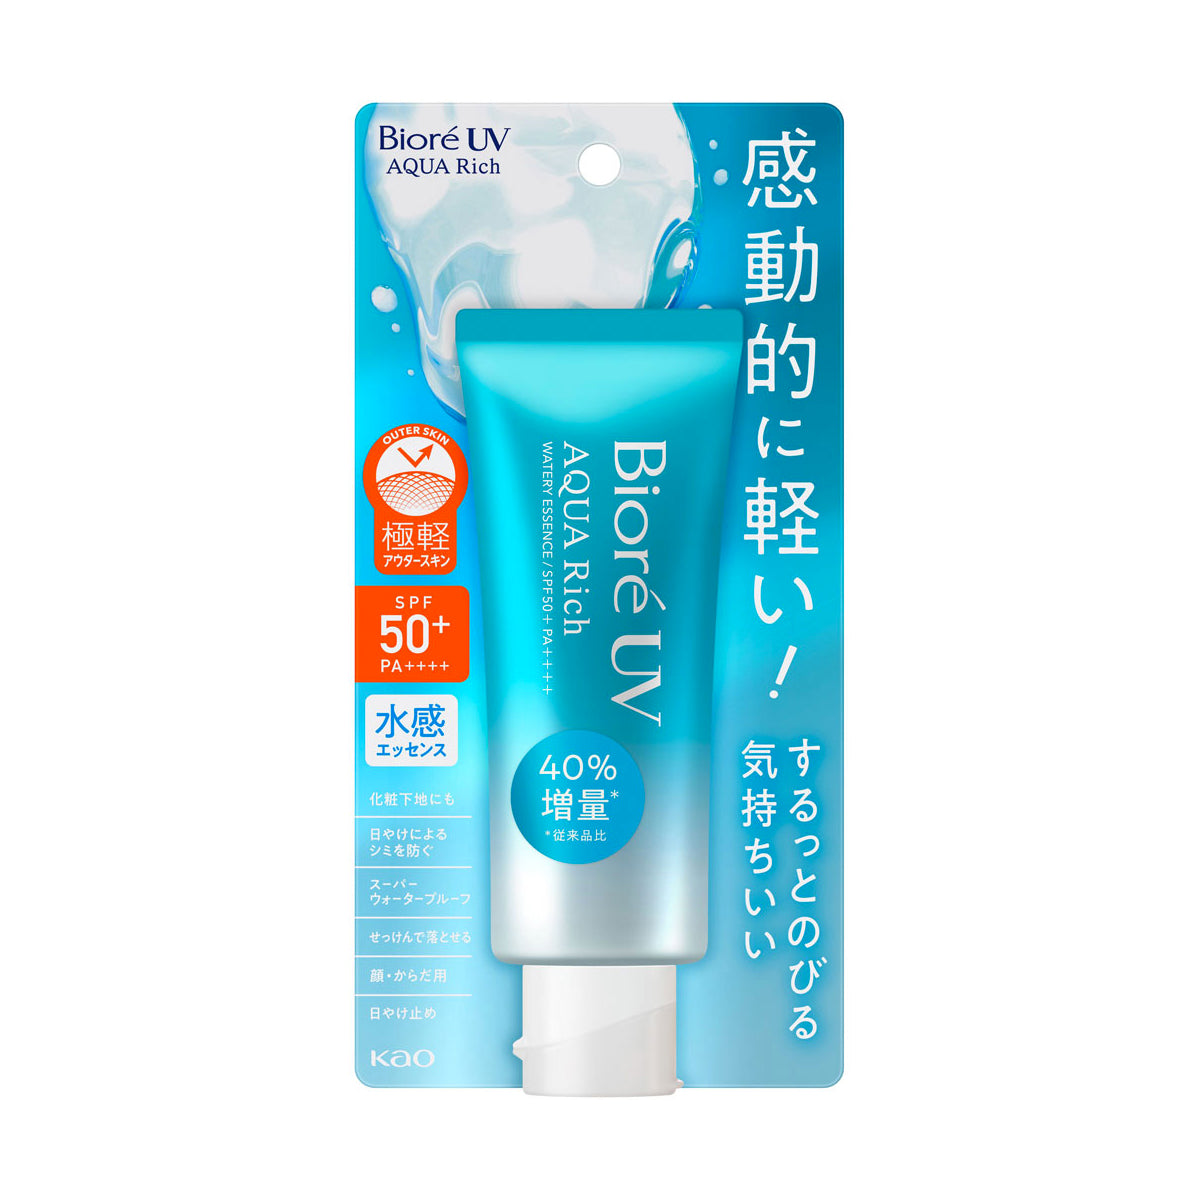 Biore UV Aqua Rich Watery Essence SPF 50 PA++++ Beauty Kao 70g  